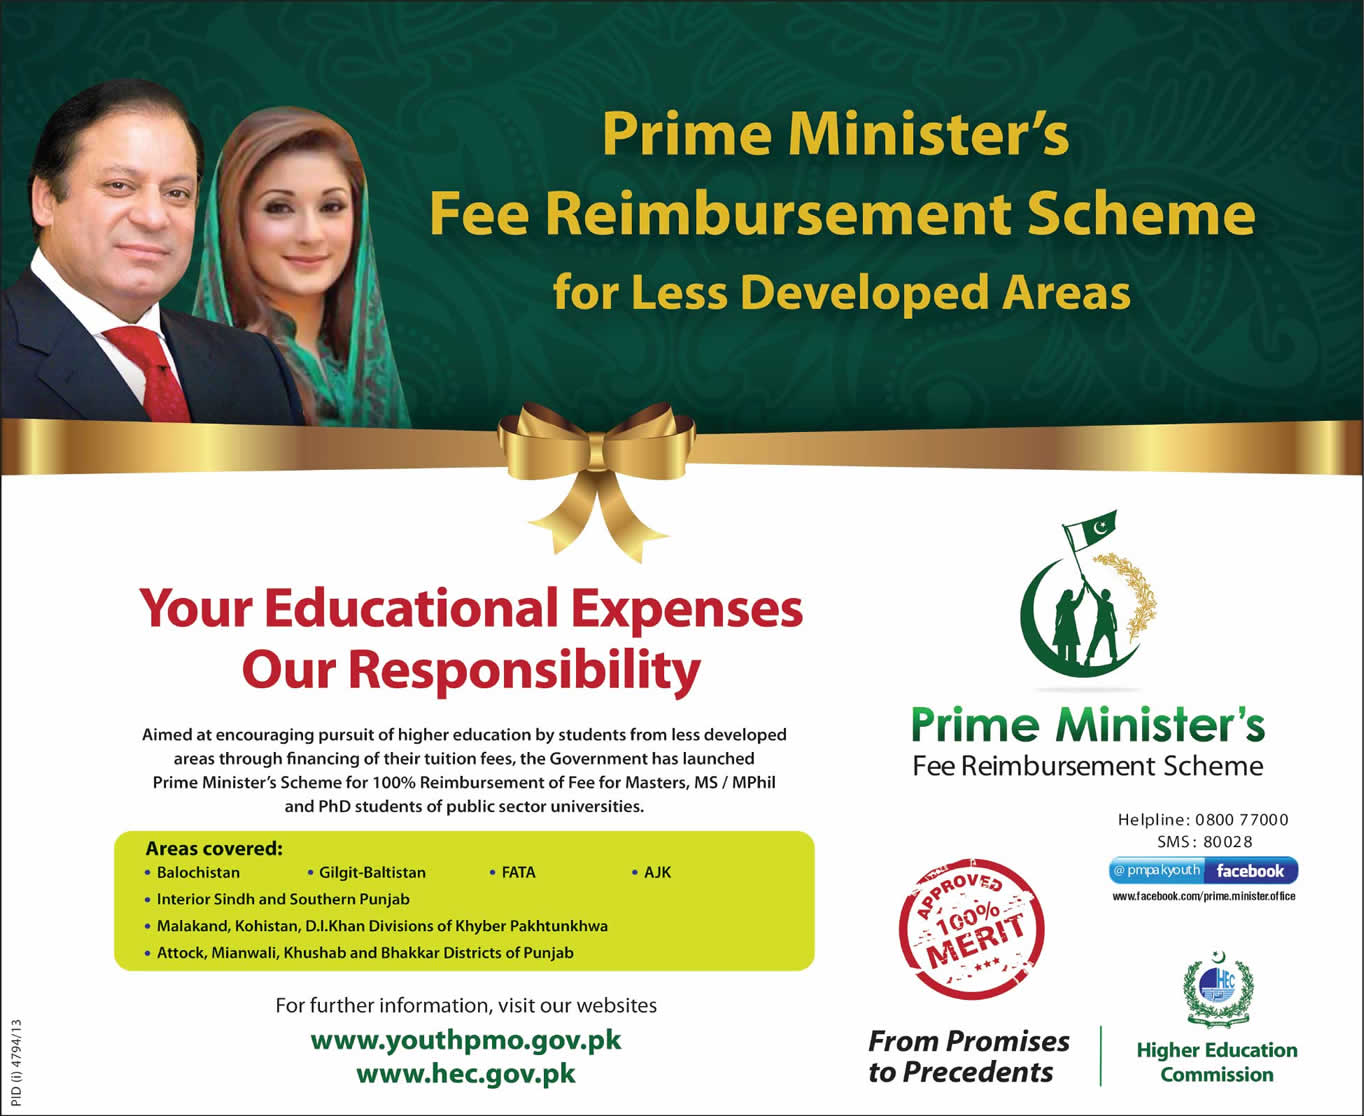 Prime Minister's Fee Reimbursement Scheme 2014 for Masters, MS / M. Phil & Ph.D. Students